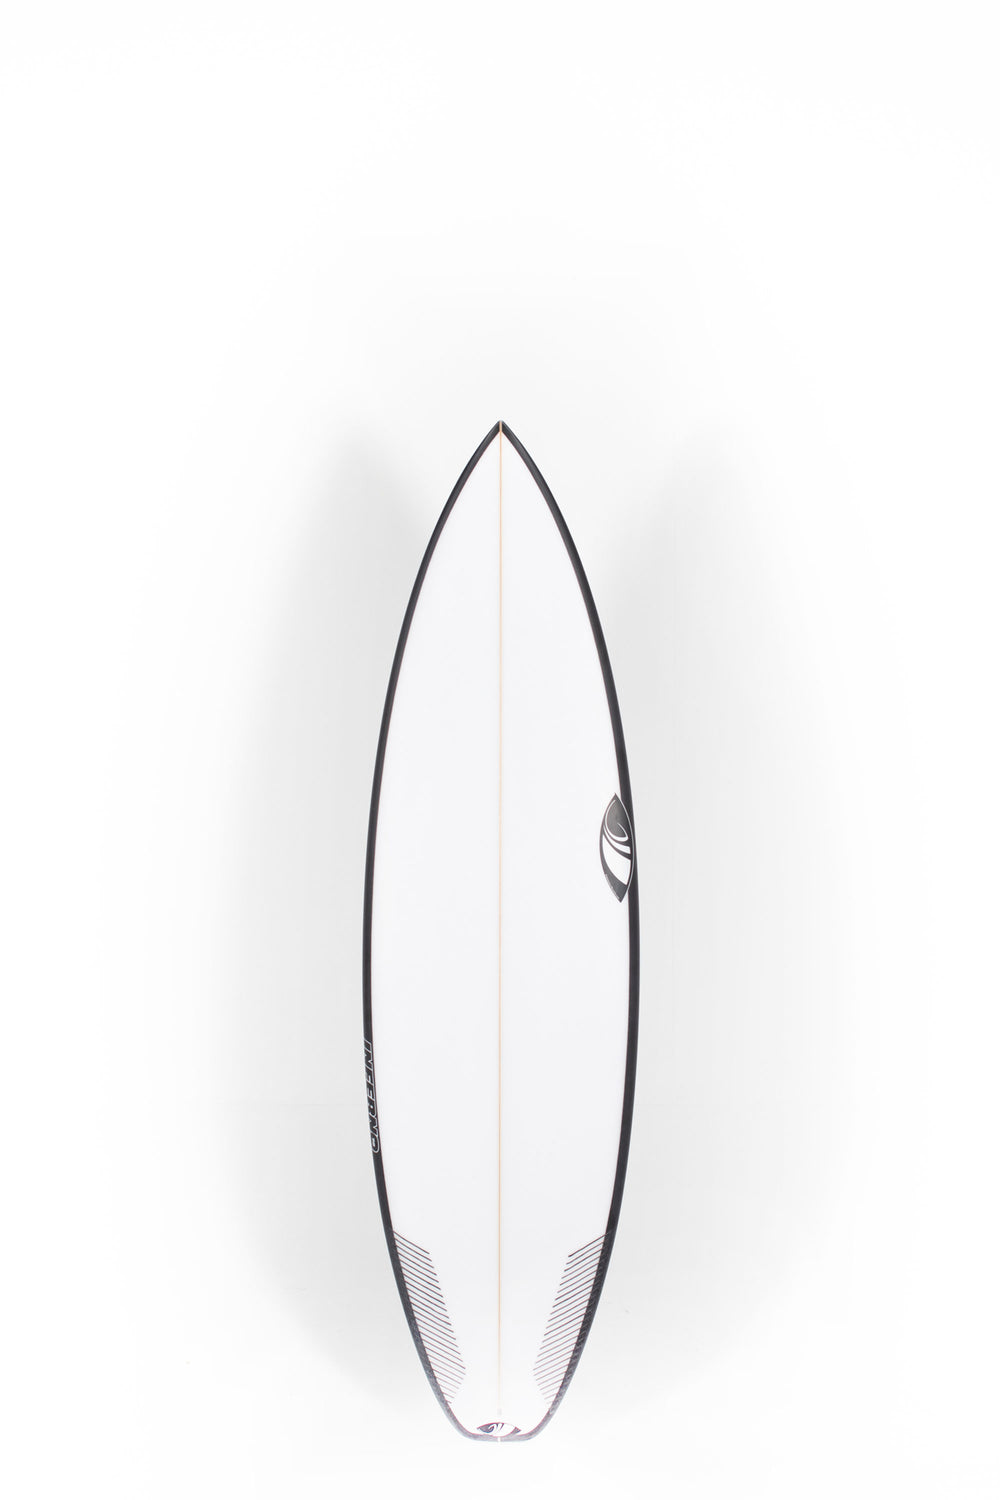 Pukas Surf Shop - Sharpeye Surfboards - INFERNO 72 by Marcio Zouvi -  6'4